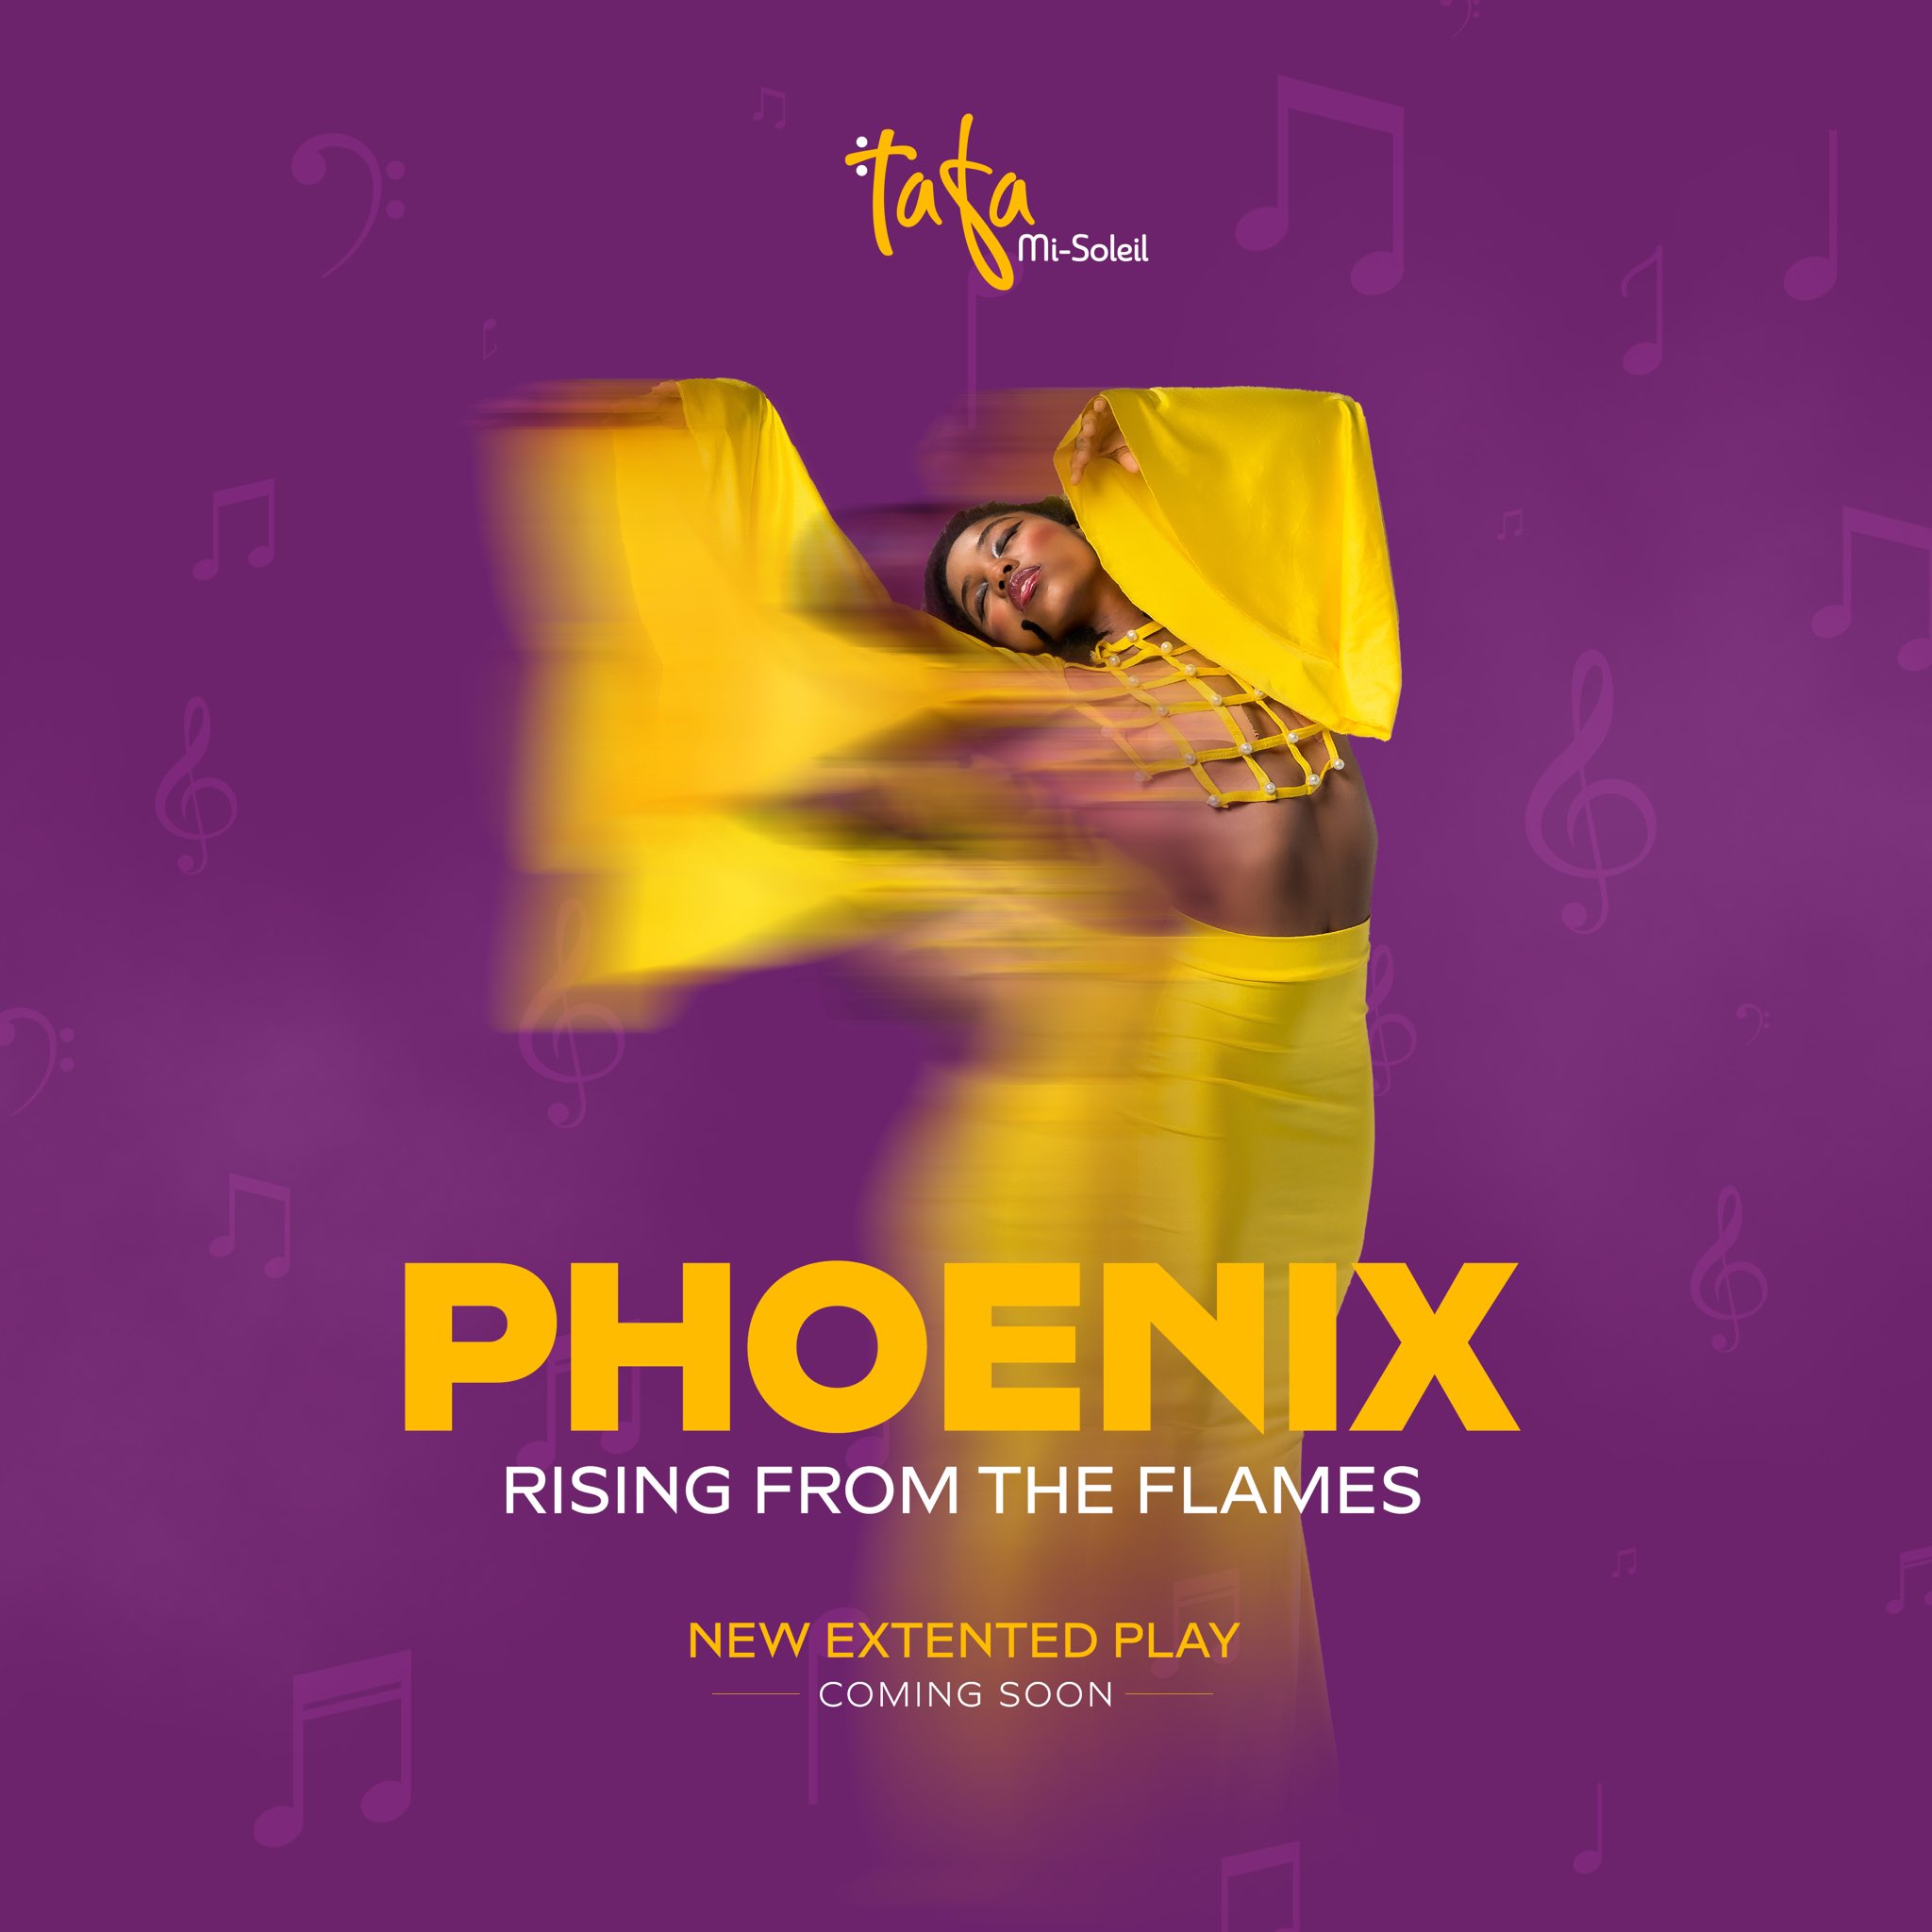 Phoenix - Tafa